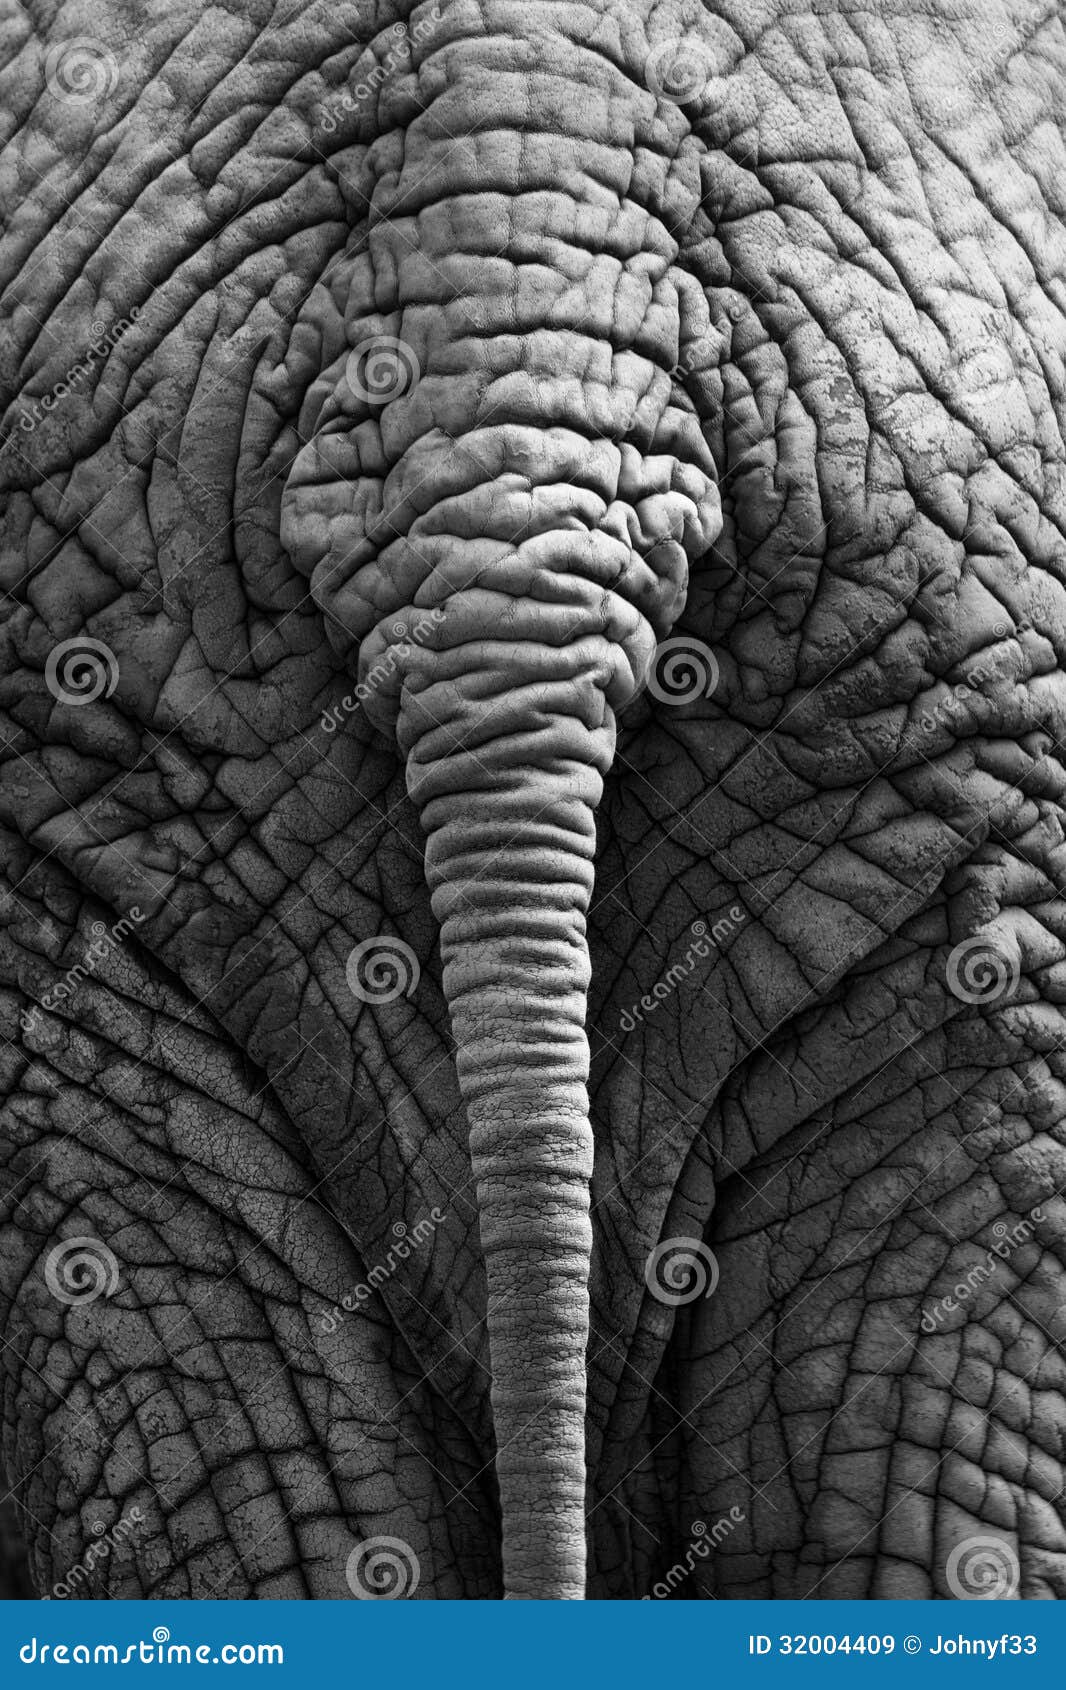 elephant tail clipart - photo #26